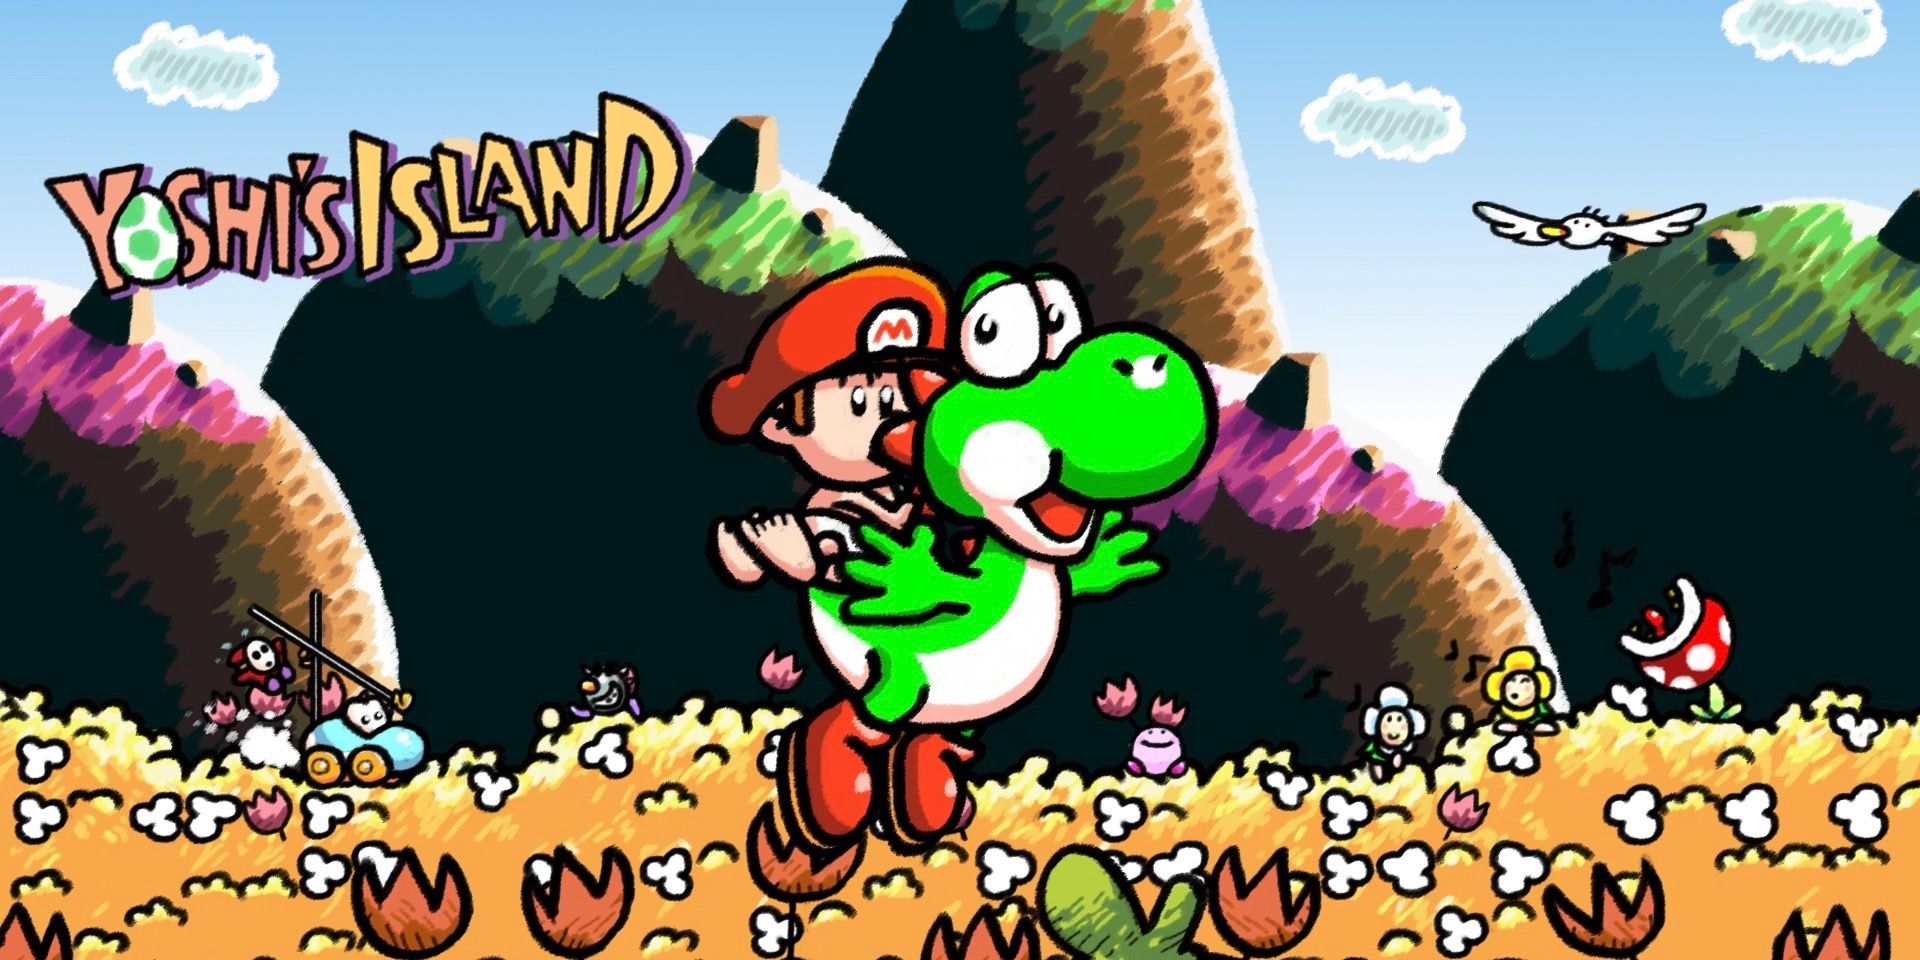 Yoshi carries baby Mario on his back from Super Mario World 2: Yoshi's Island